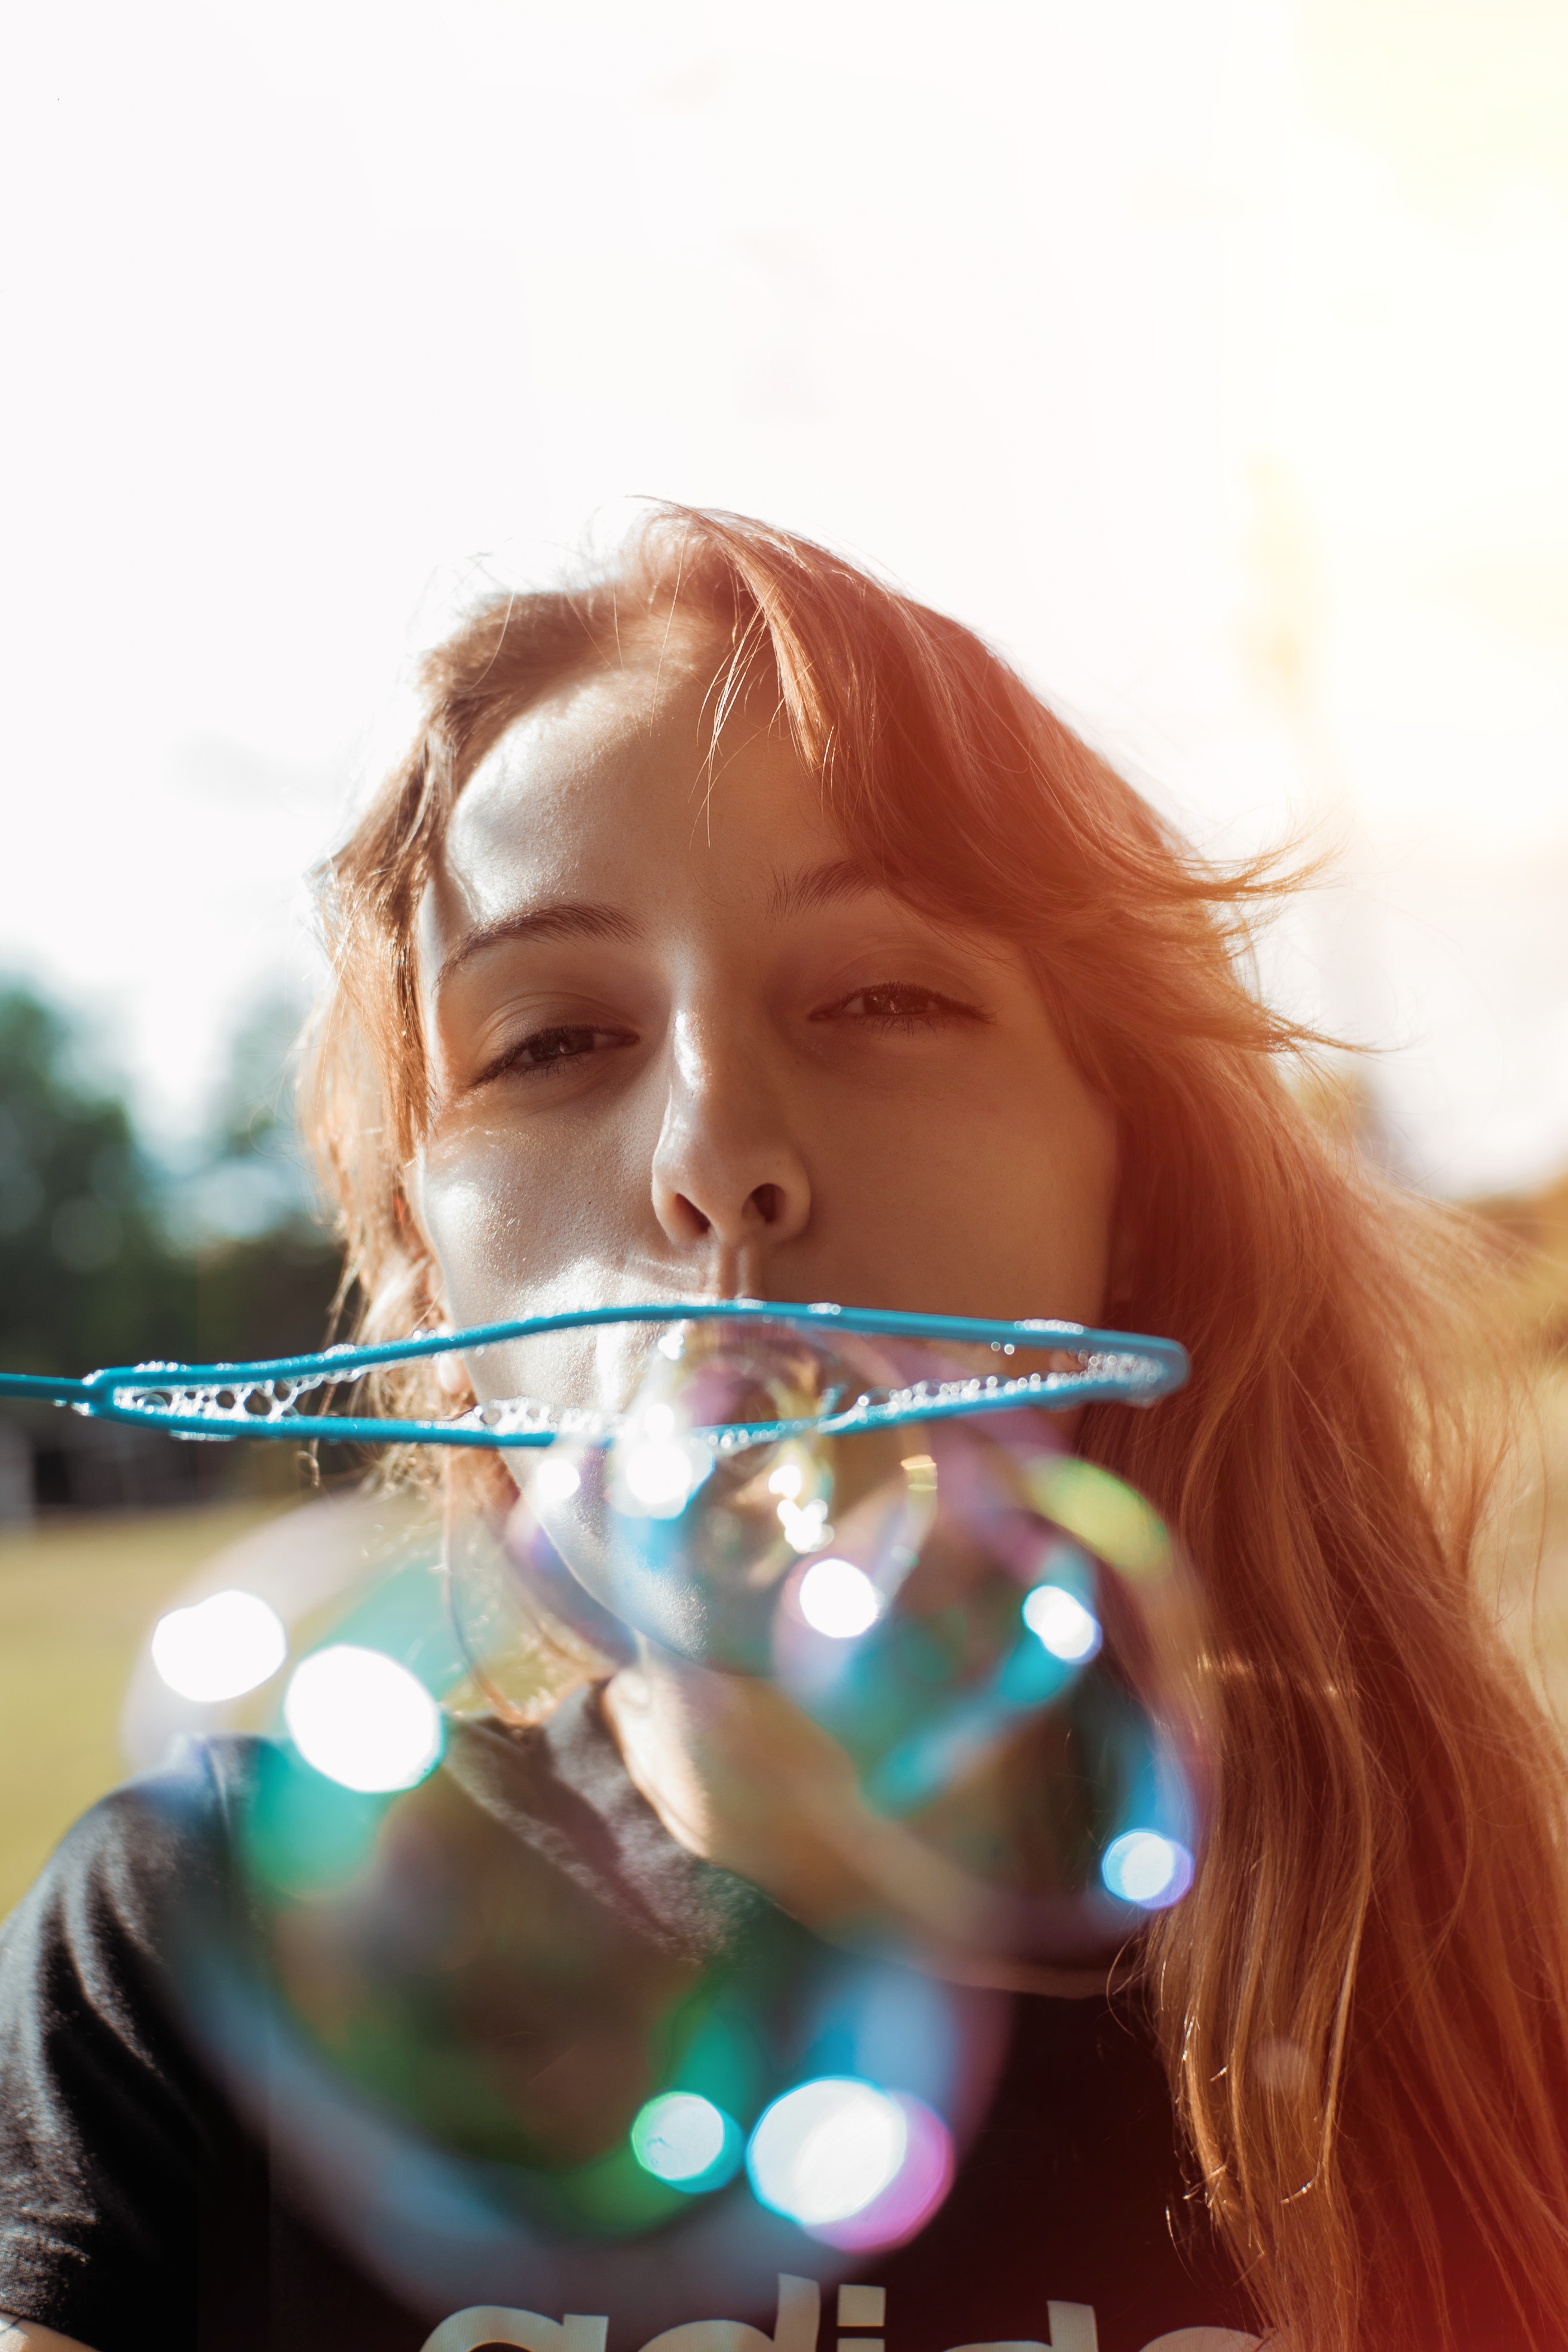 A woman blowing bubbles. | Source: Pexels